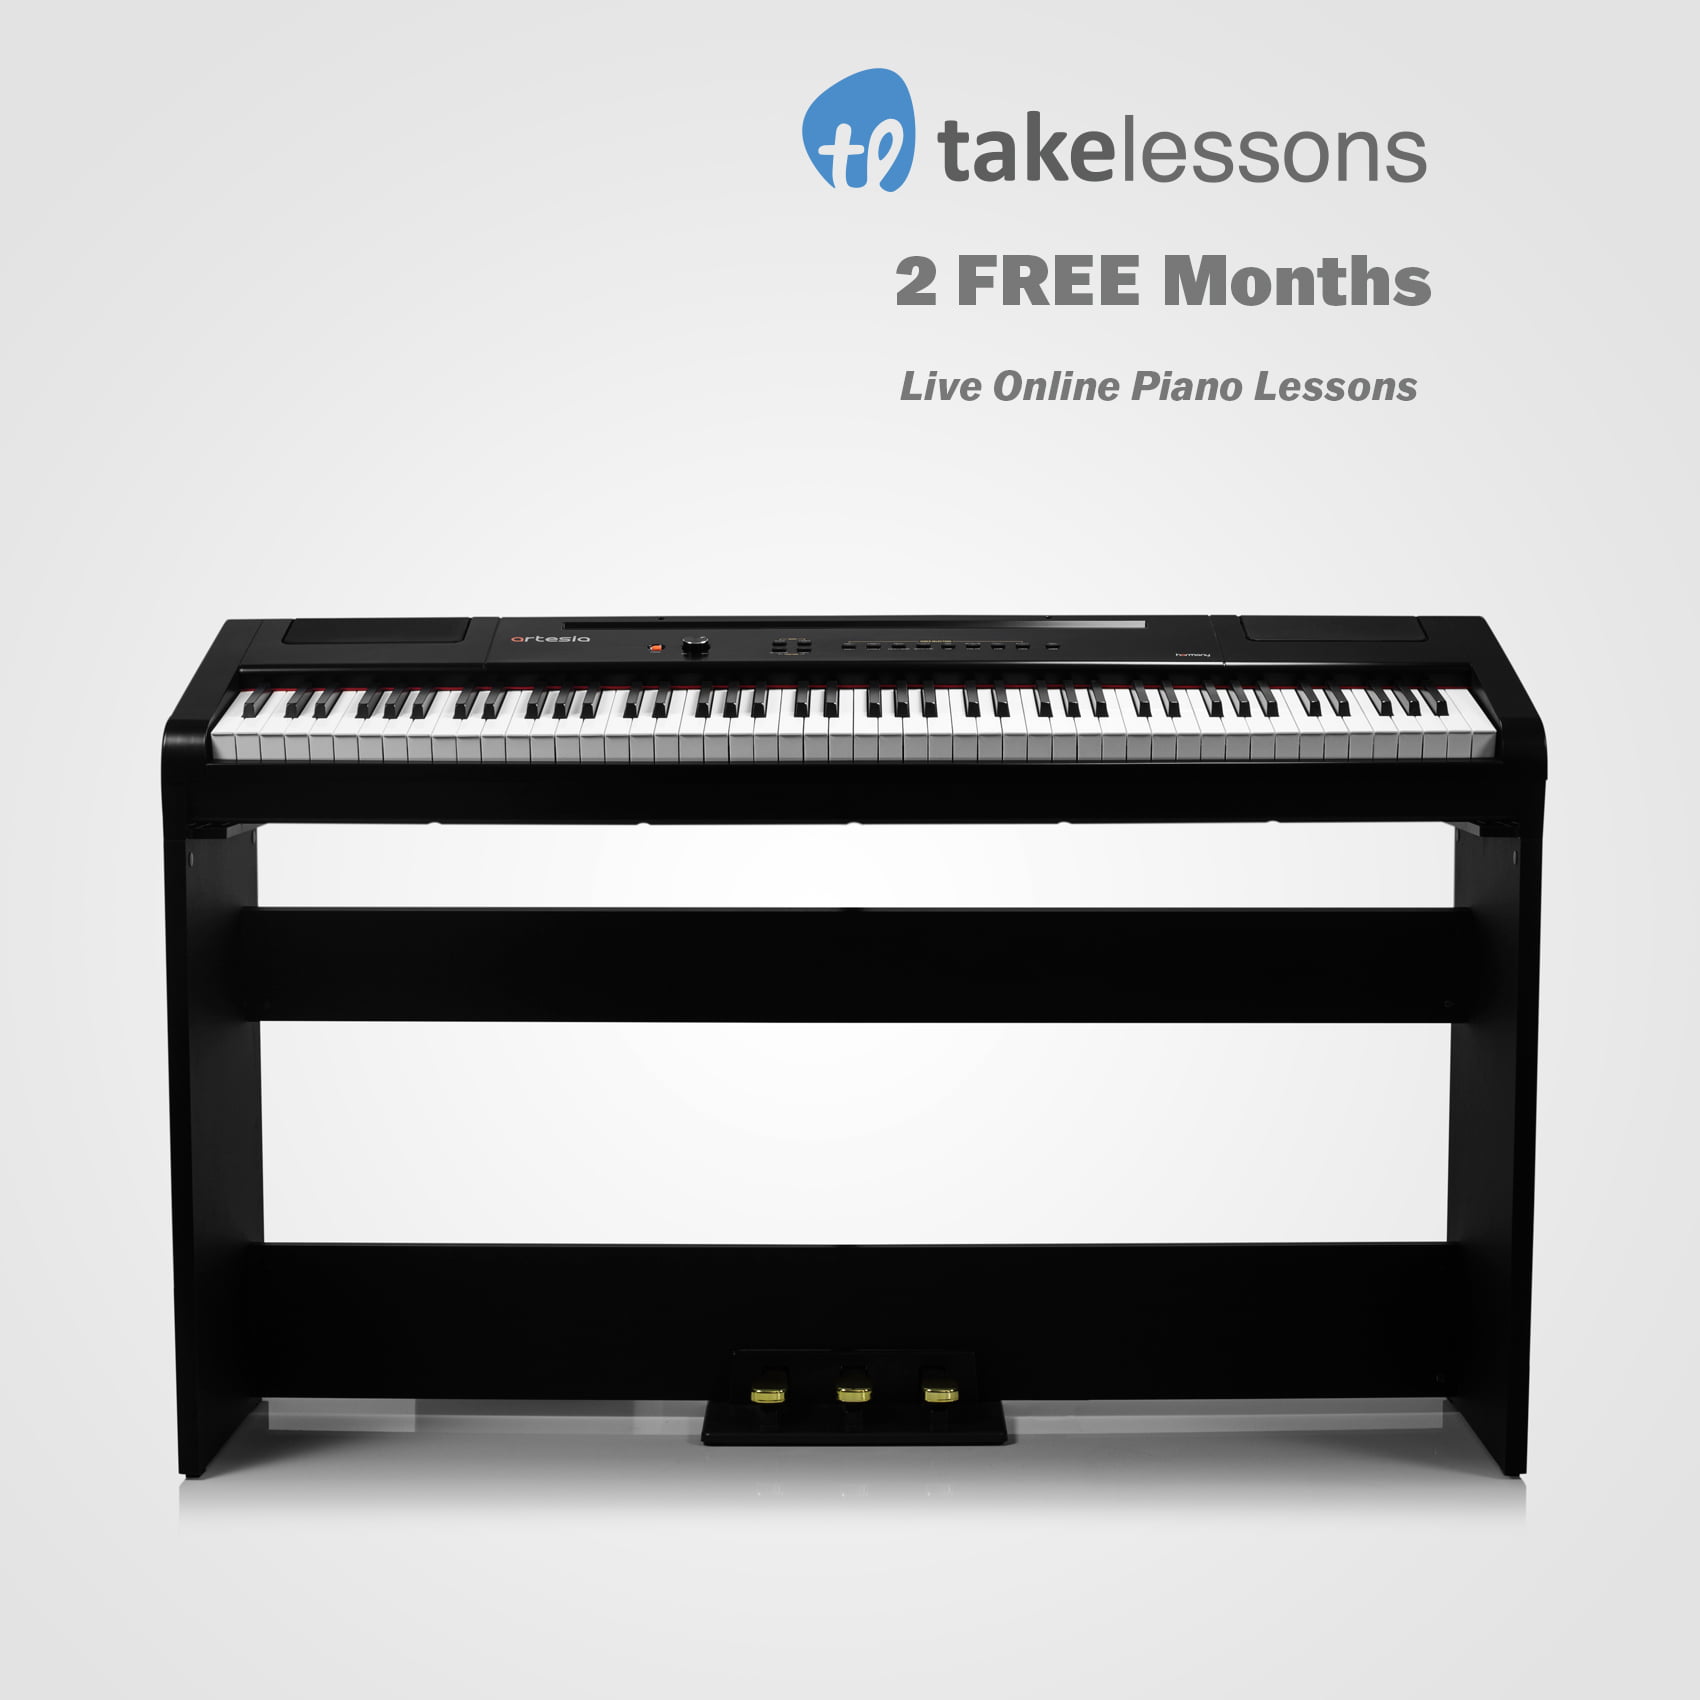 Artesia Harmony 88 Key Digital Home Piano With 2 Months Of Free